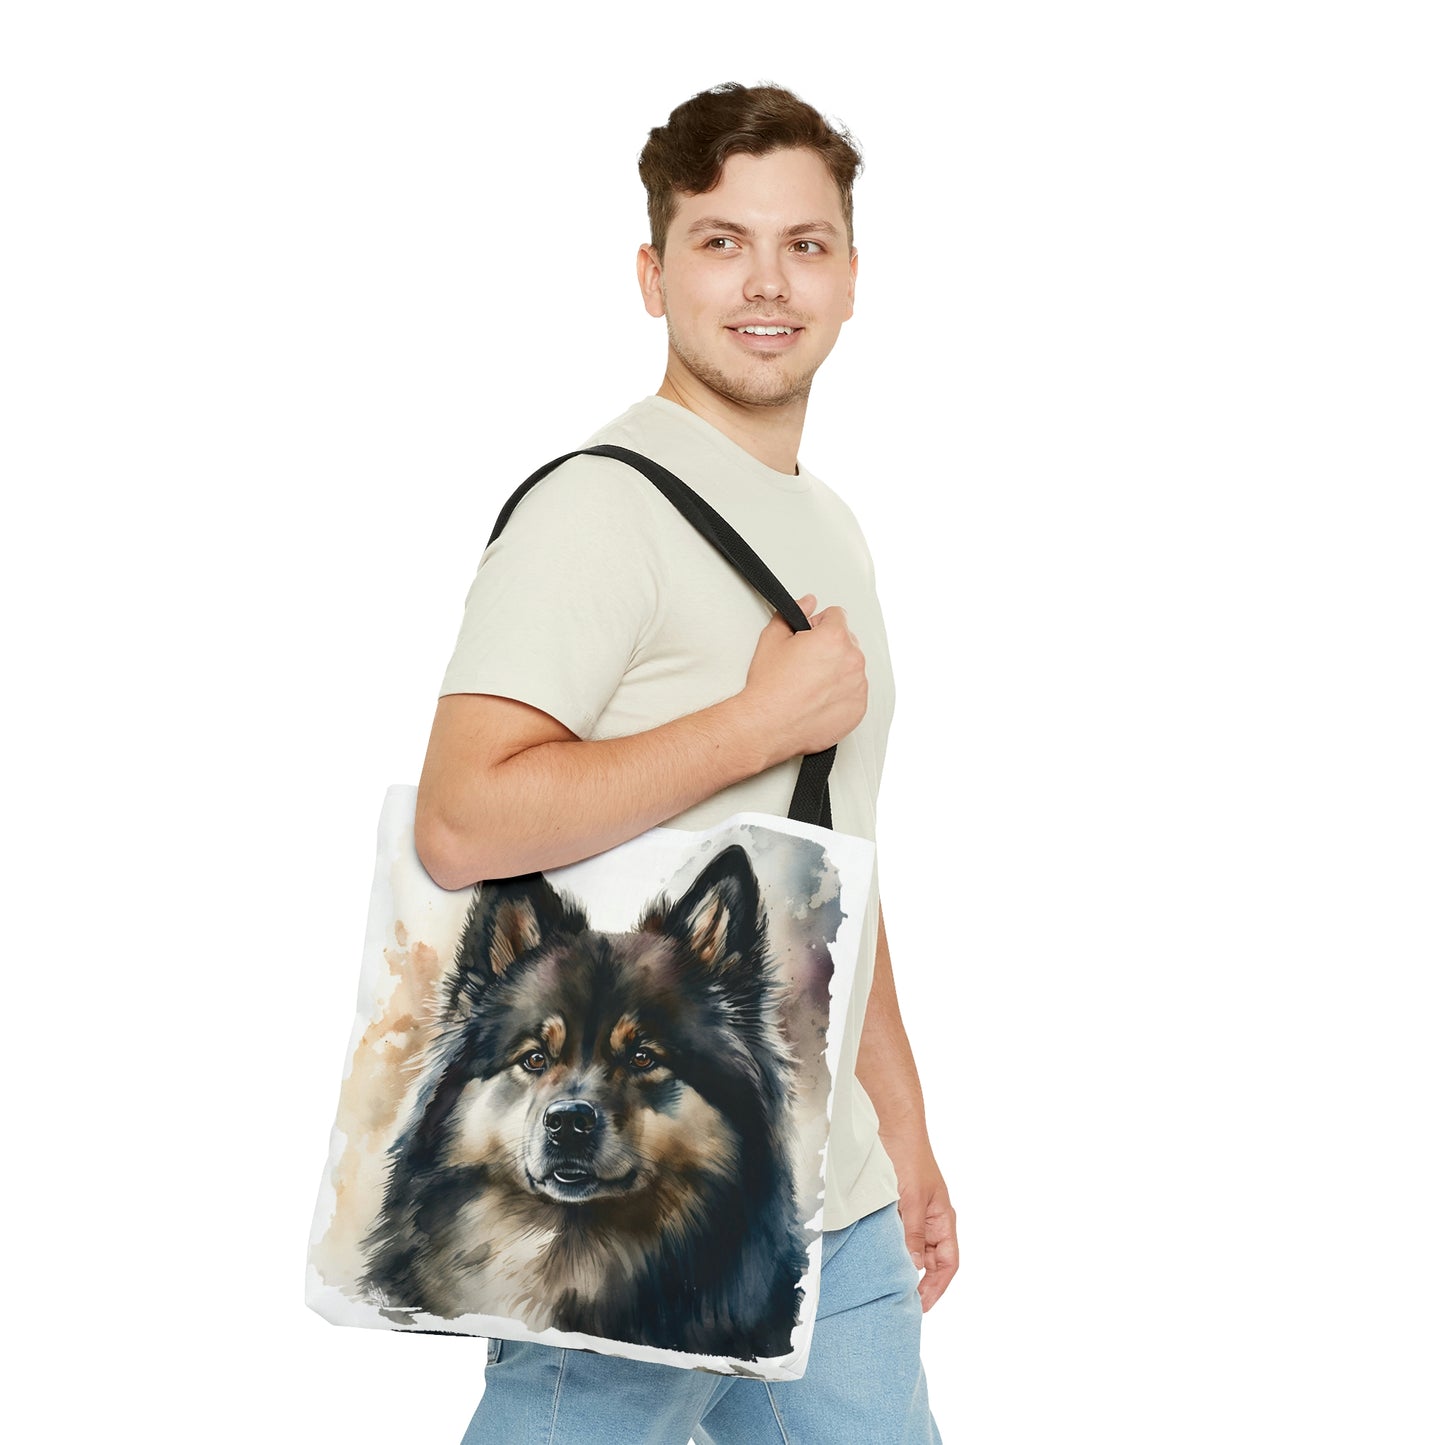 Finnish Lapphund - Portrait #1 - Tote Bag